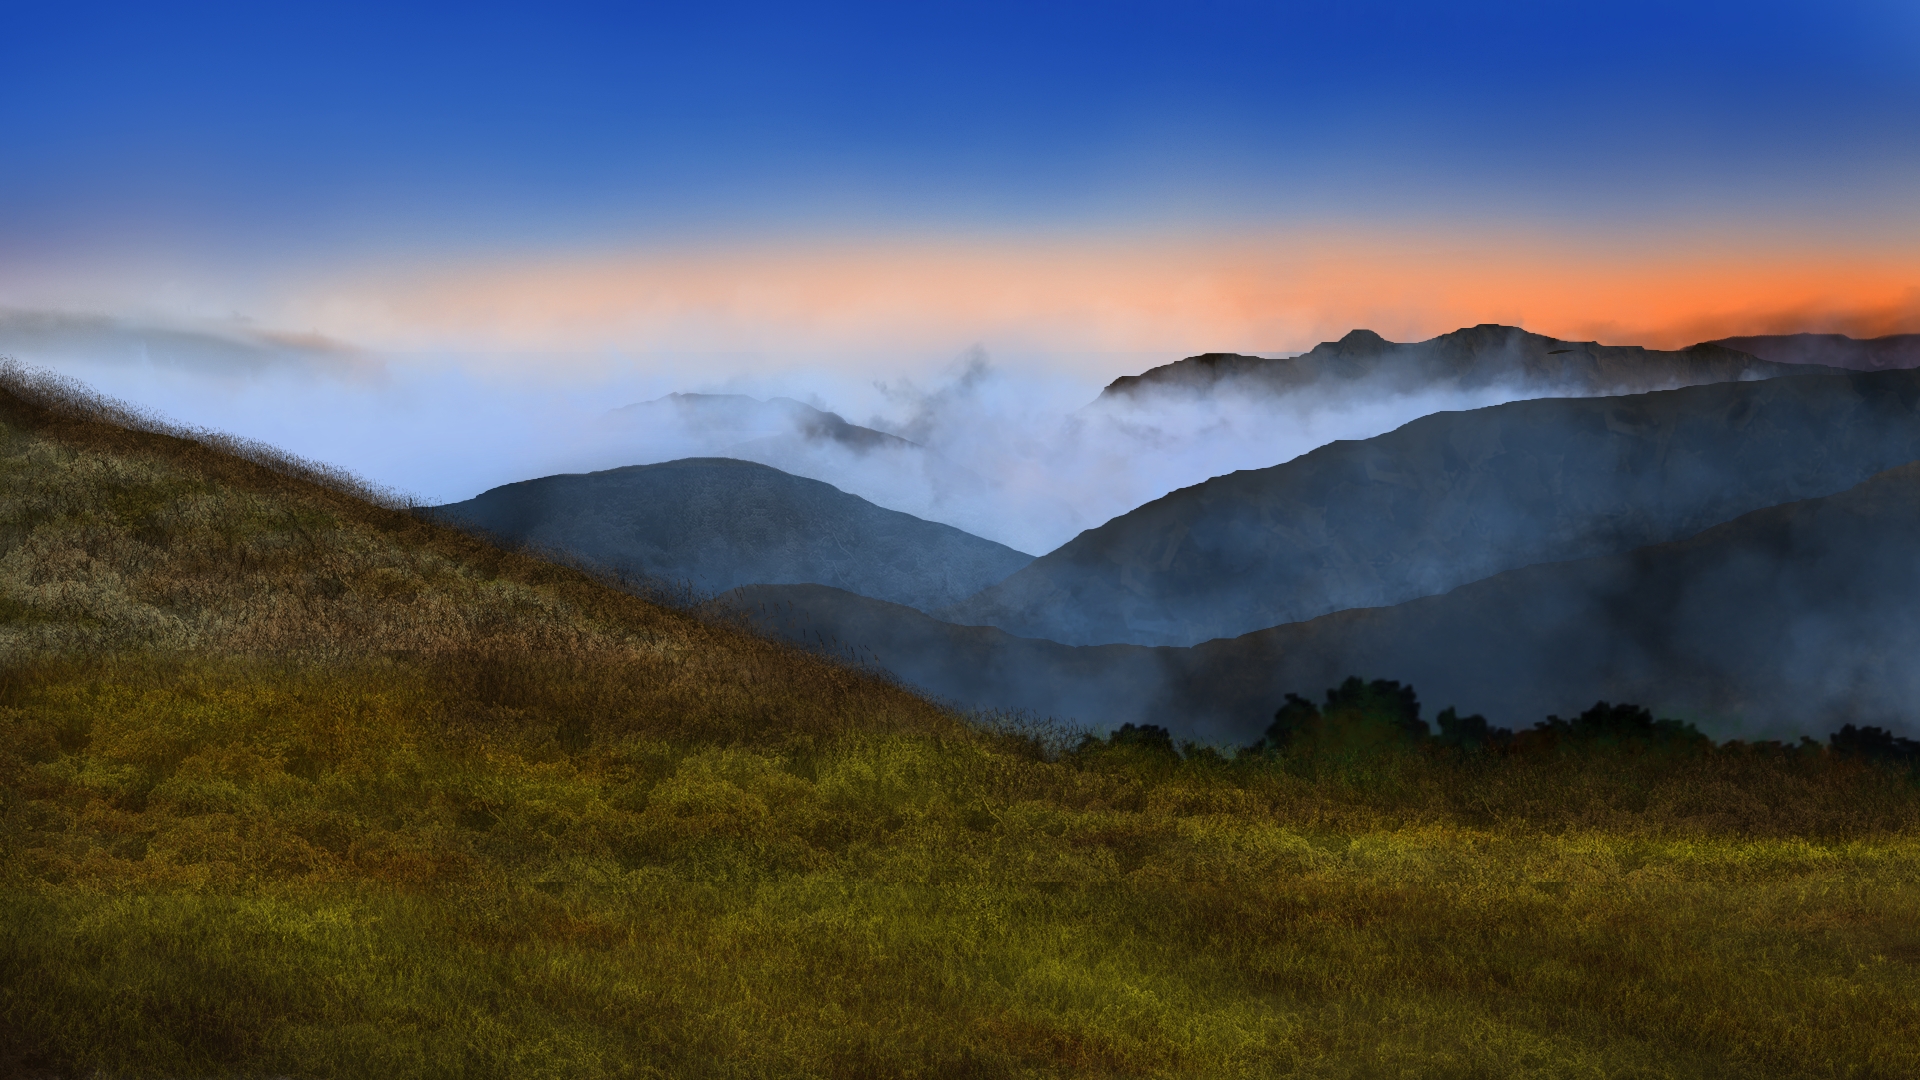 General 1920x1080 digital painting digital art nature landscape mist grass mountains